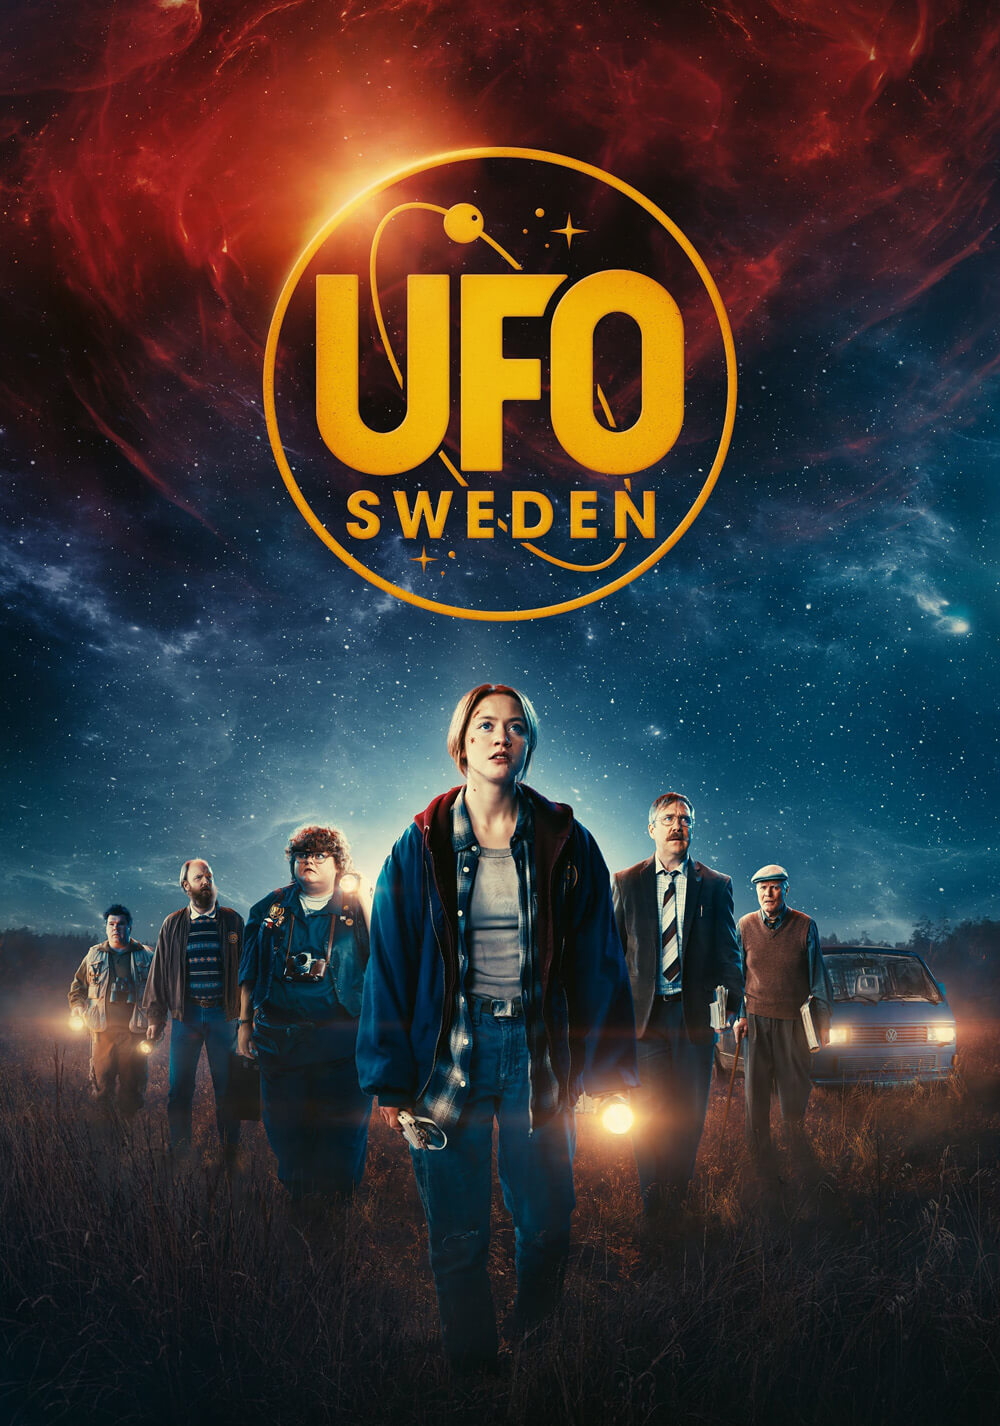 بشقاب پرنده سوئد (UFO Sweden)